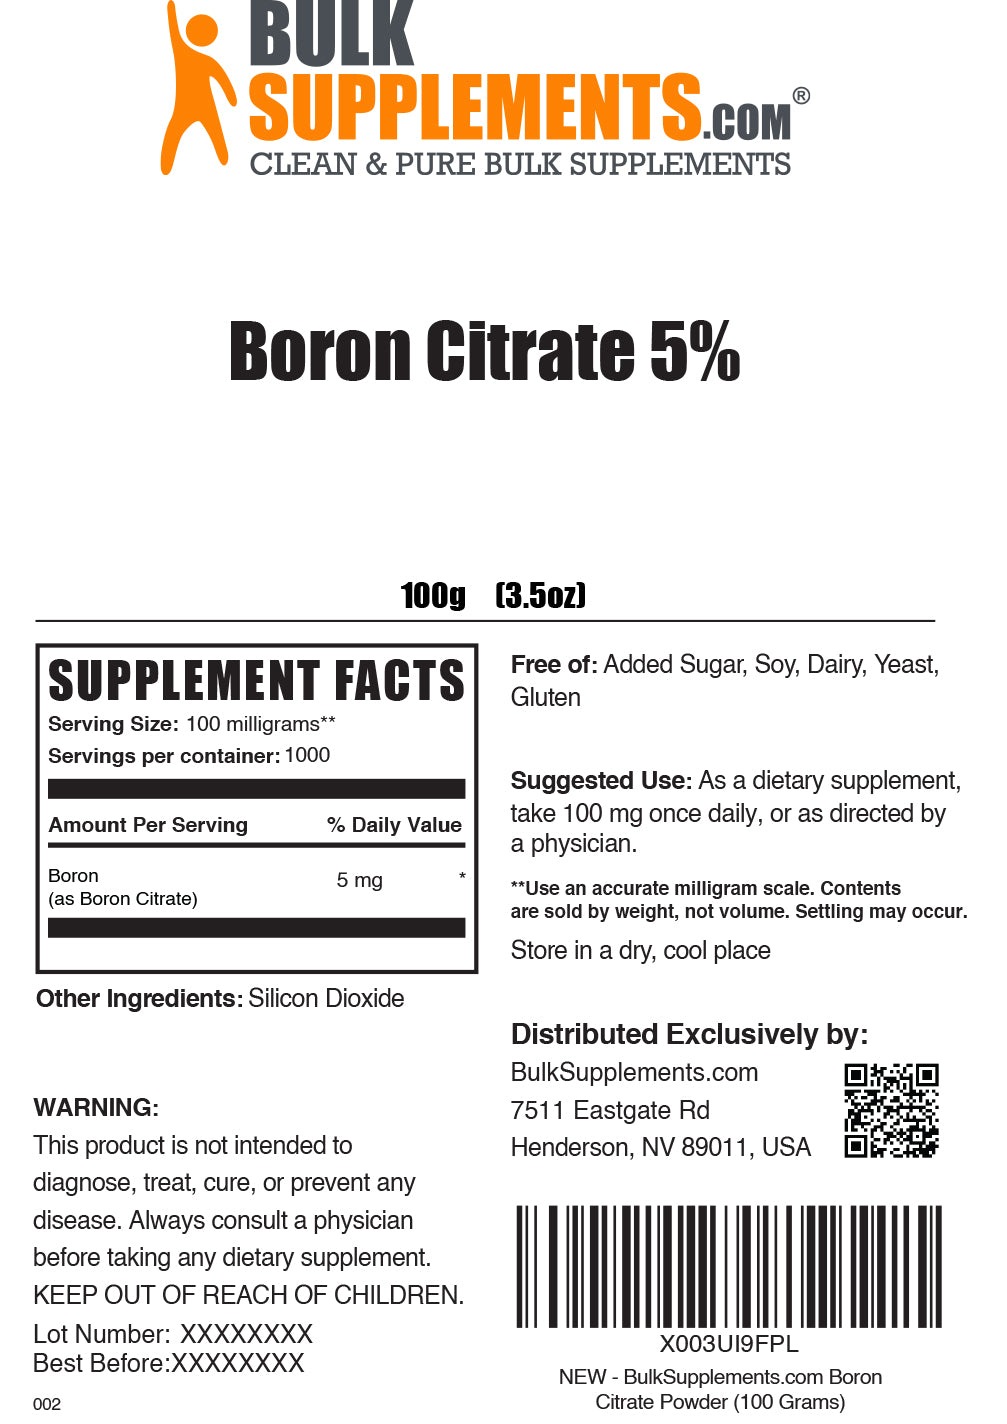 Boron Citrate Powder 100g Label